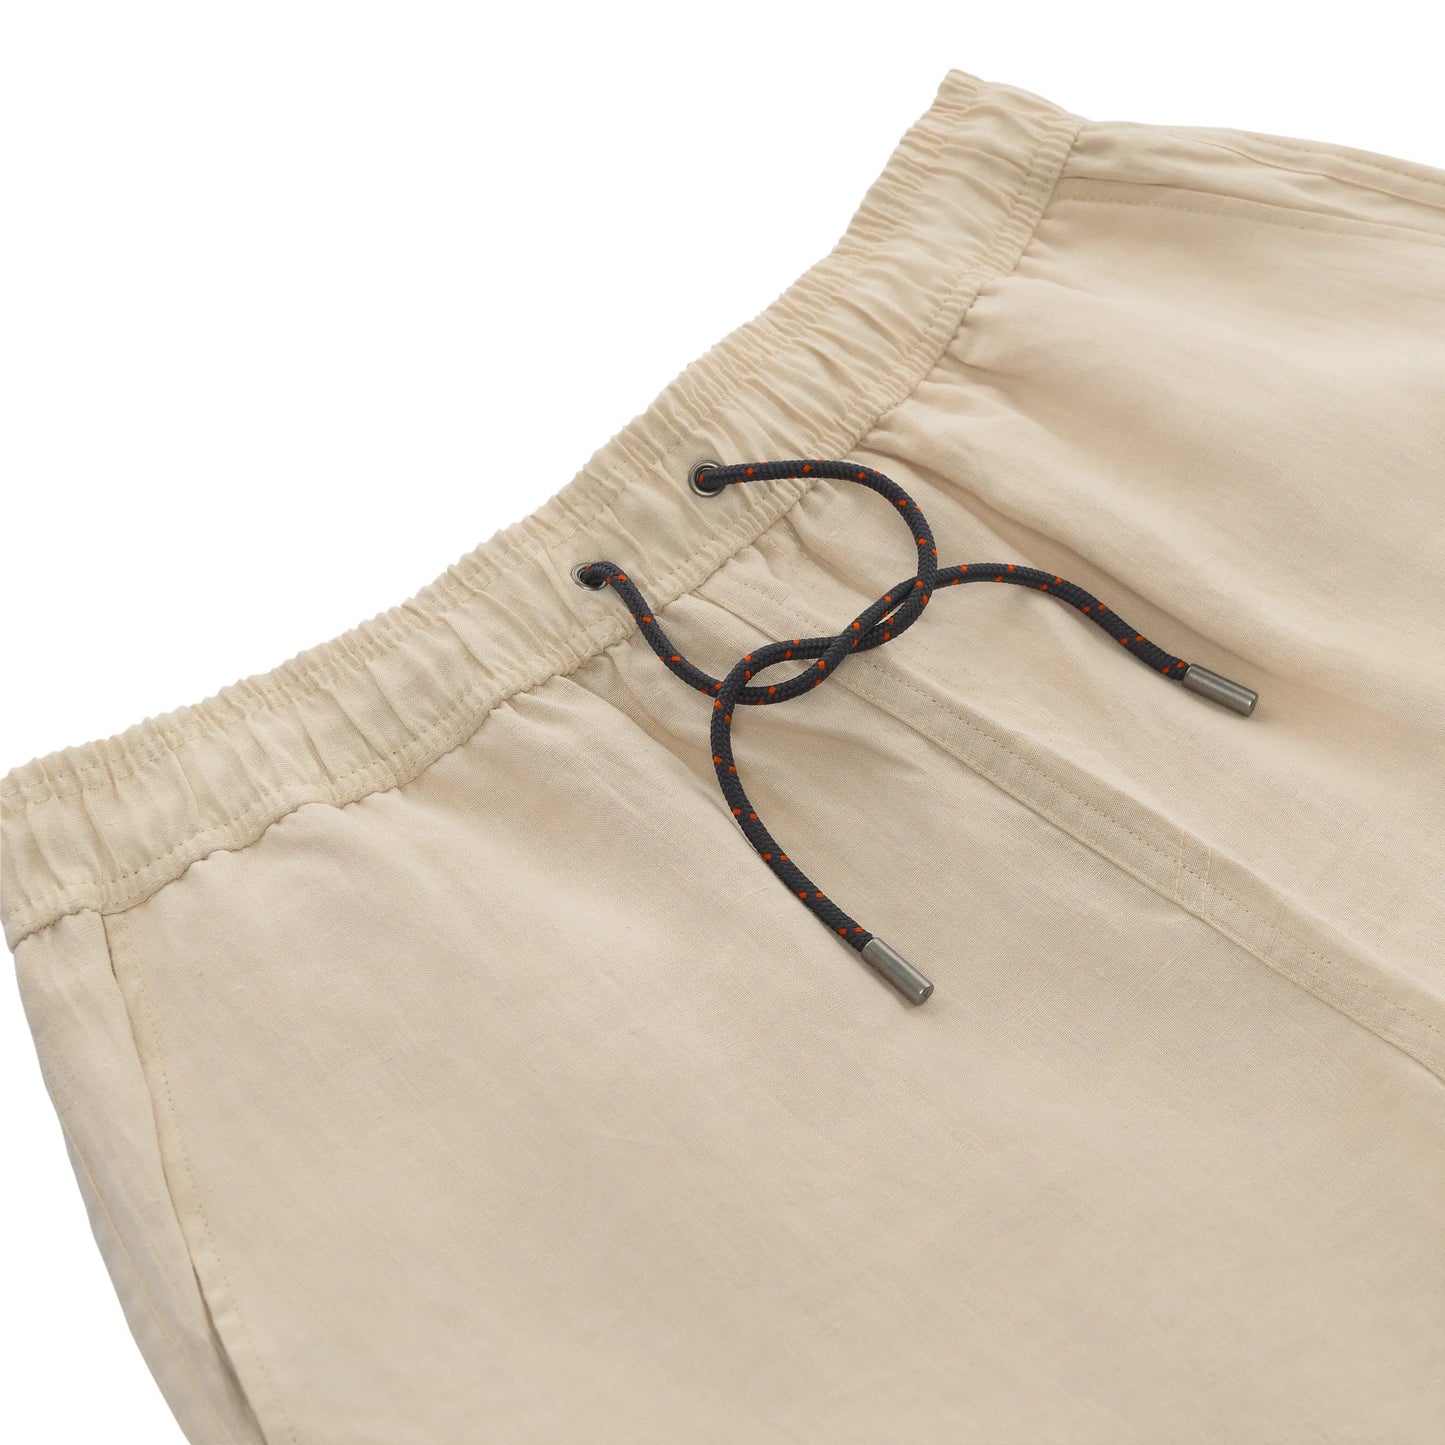 Sease COD-2 Hemp Drawstring Shorts in Beige - SARTALE